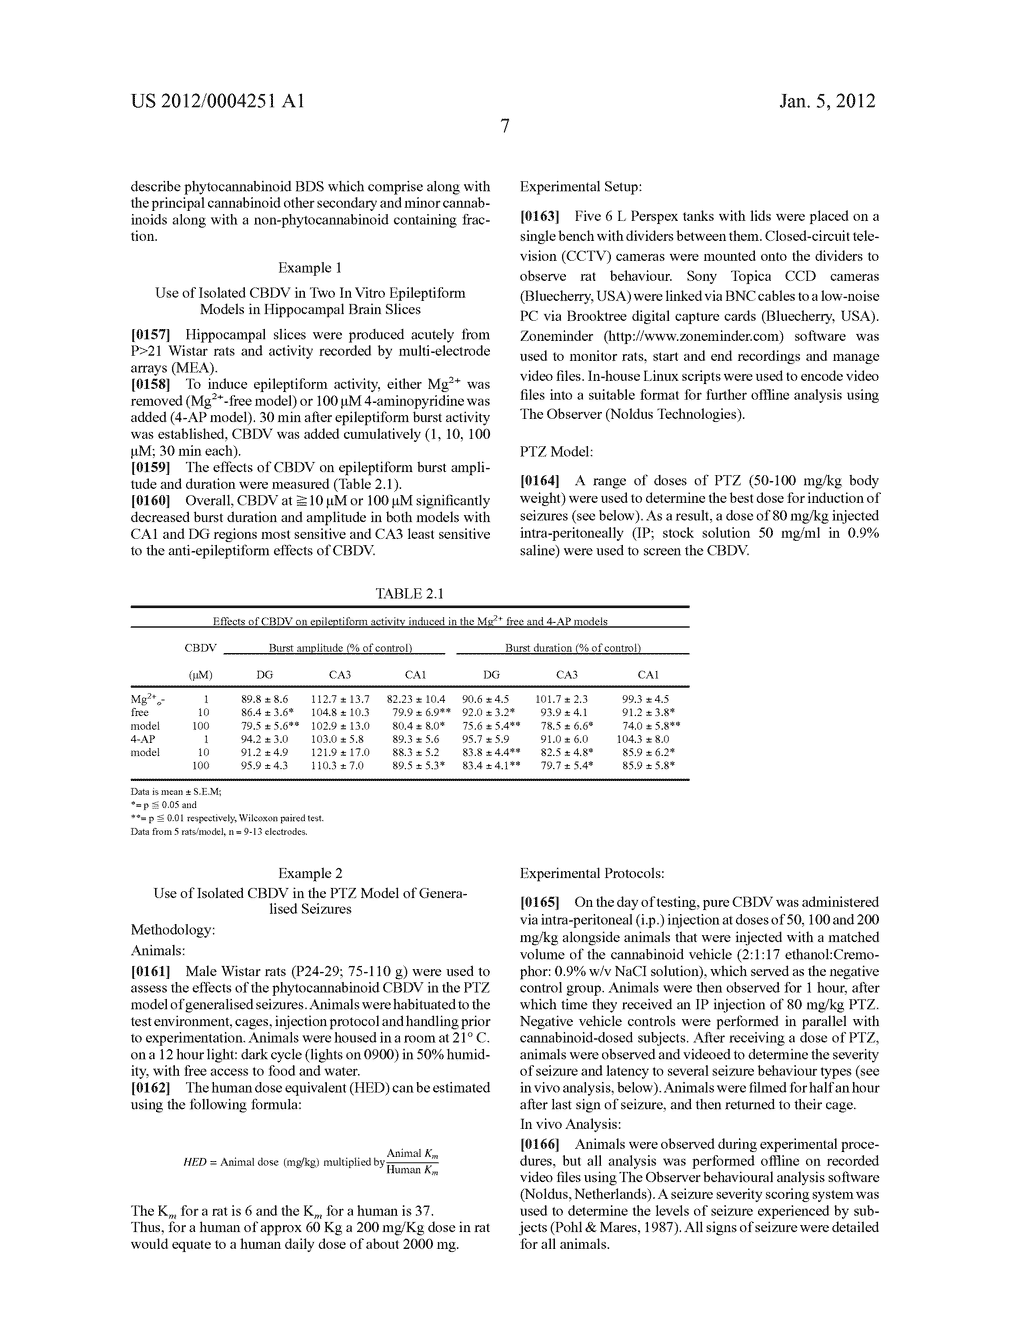 USE OF THE PHYTOCANNABINOID CANNABIDIVARIN (CBDV) IN THE TREATMENT OF     EPILEPSY - diagram, schematic, and image 33